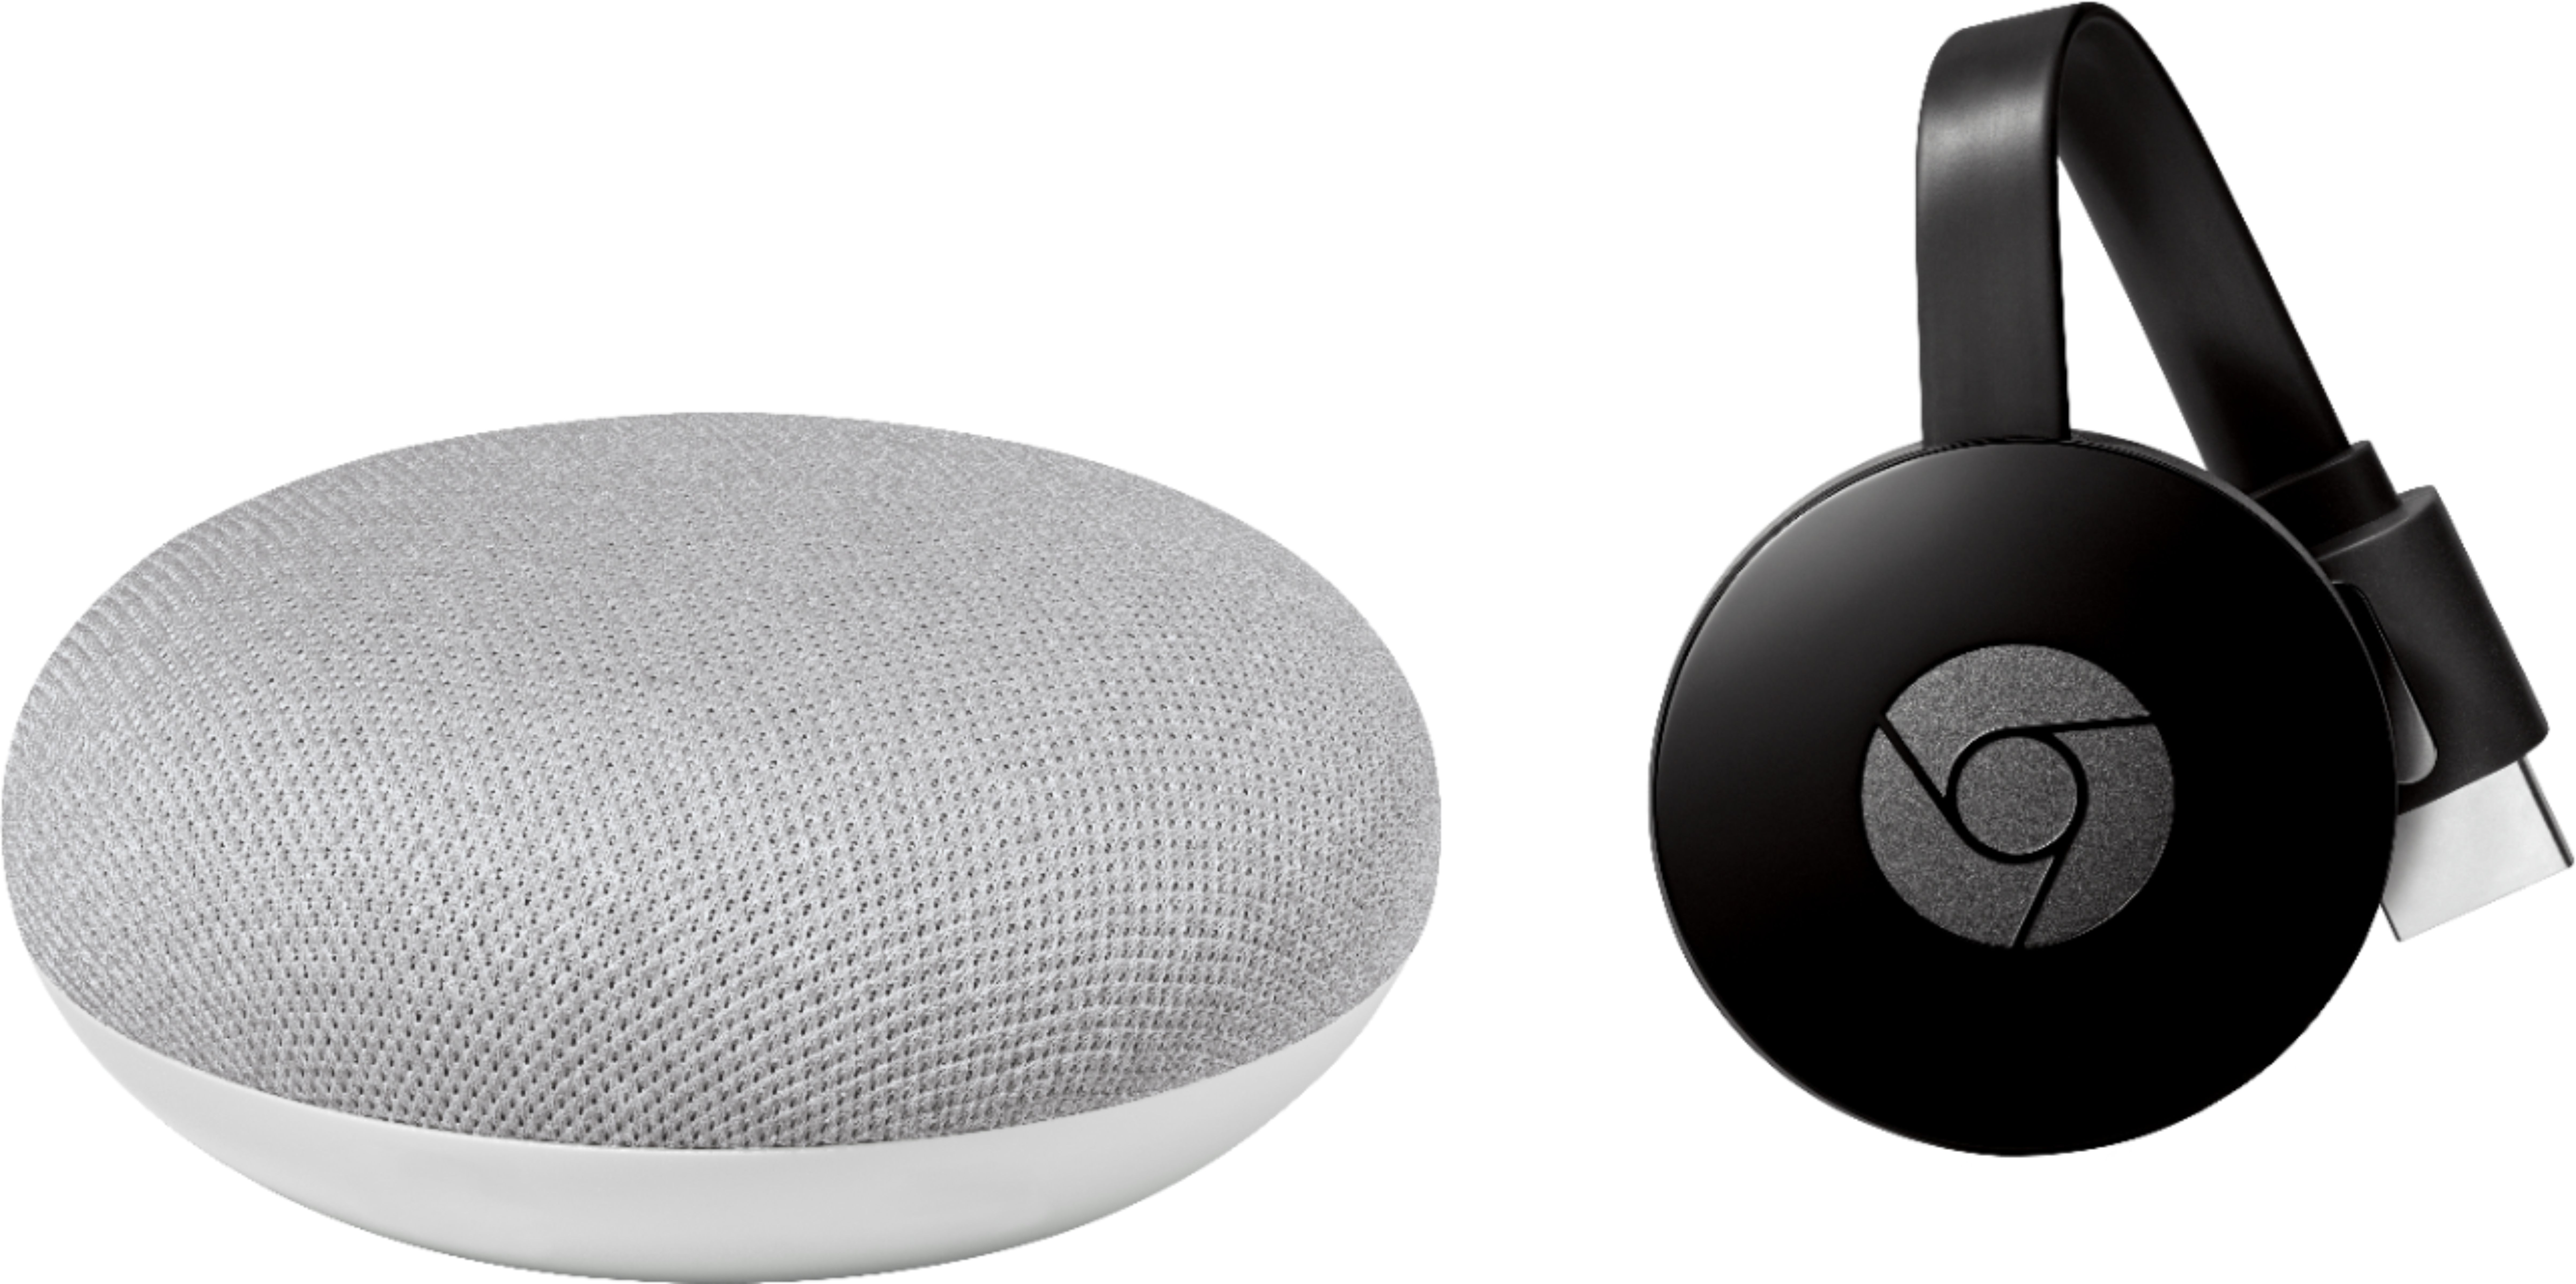 Smart Speaker with Google Assistant 